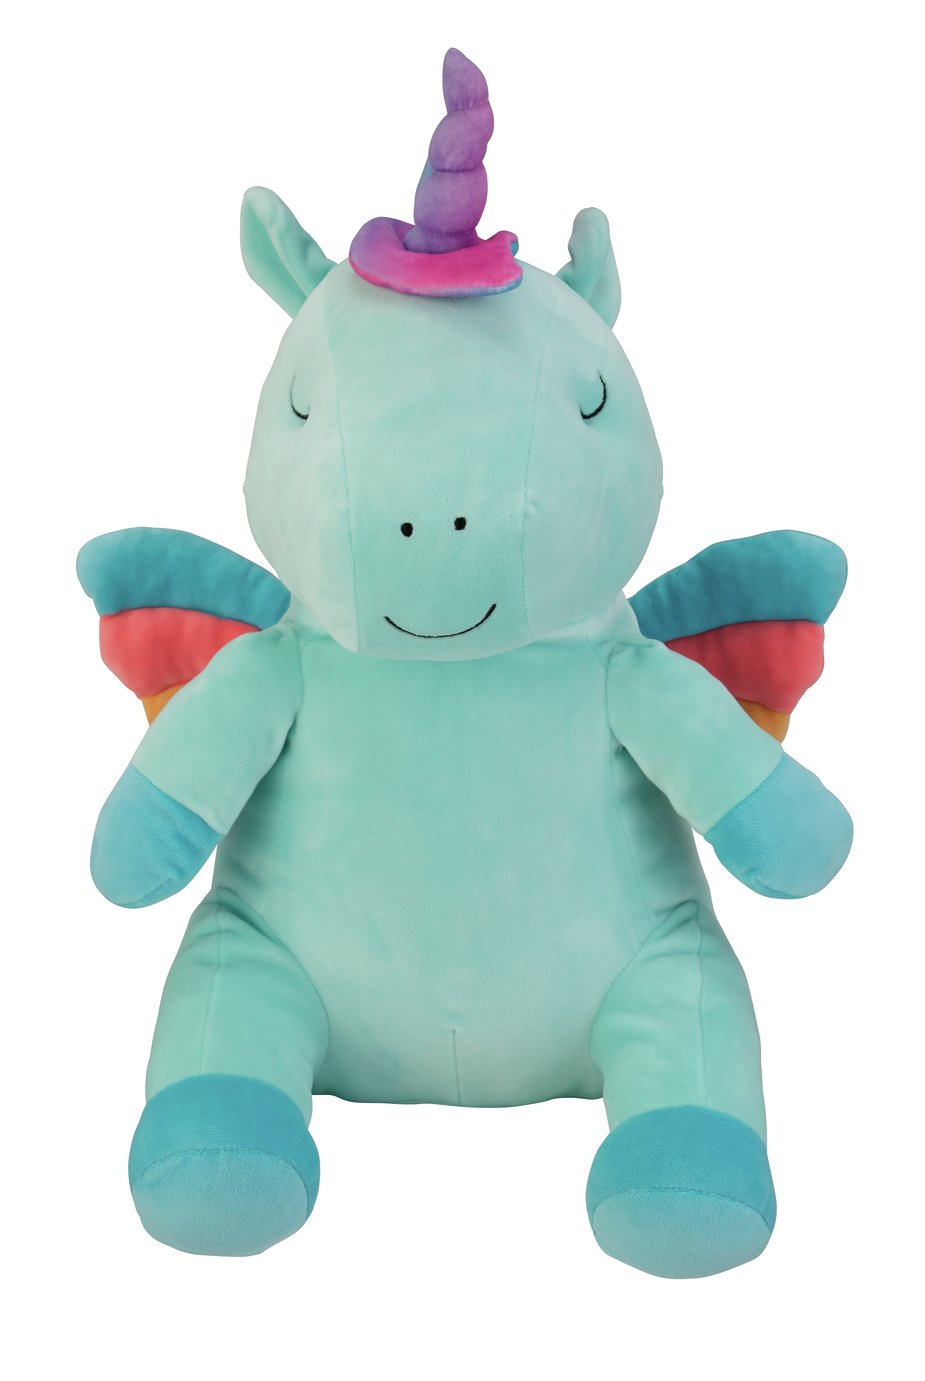 Squishy Unicorn 14 Inch Soft Toy review